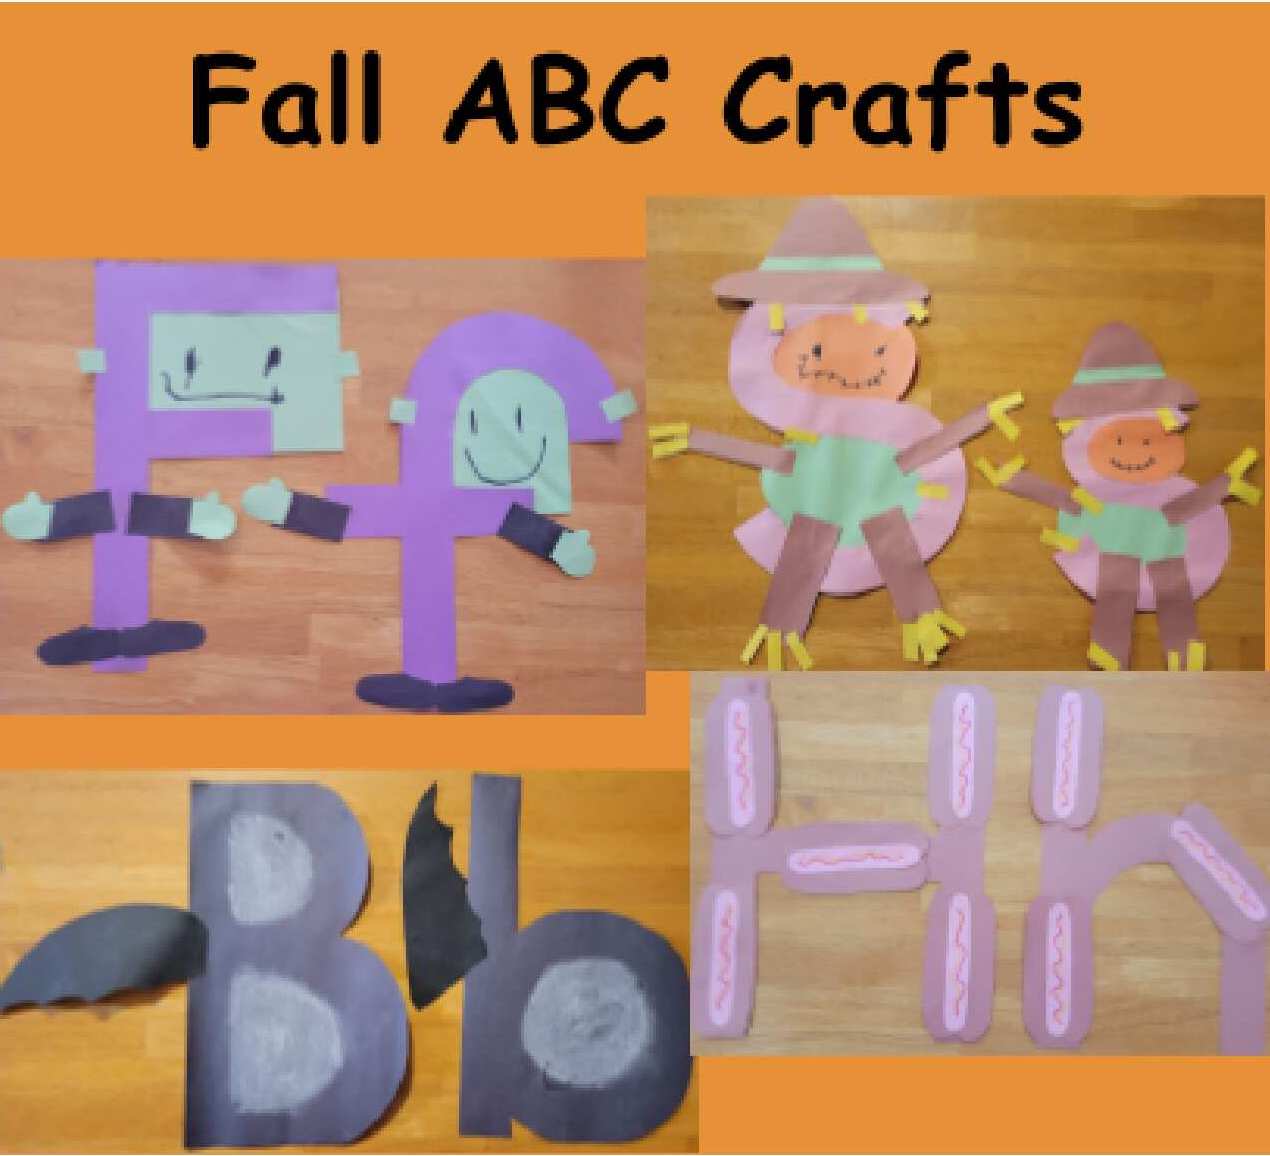 Fall ABC Crafts